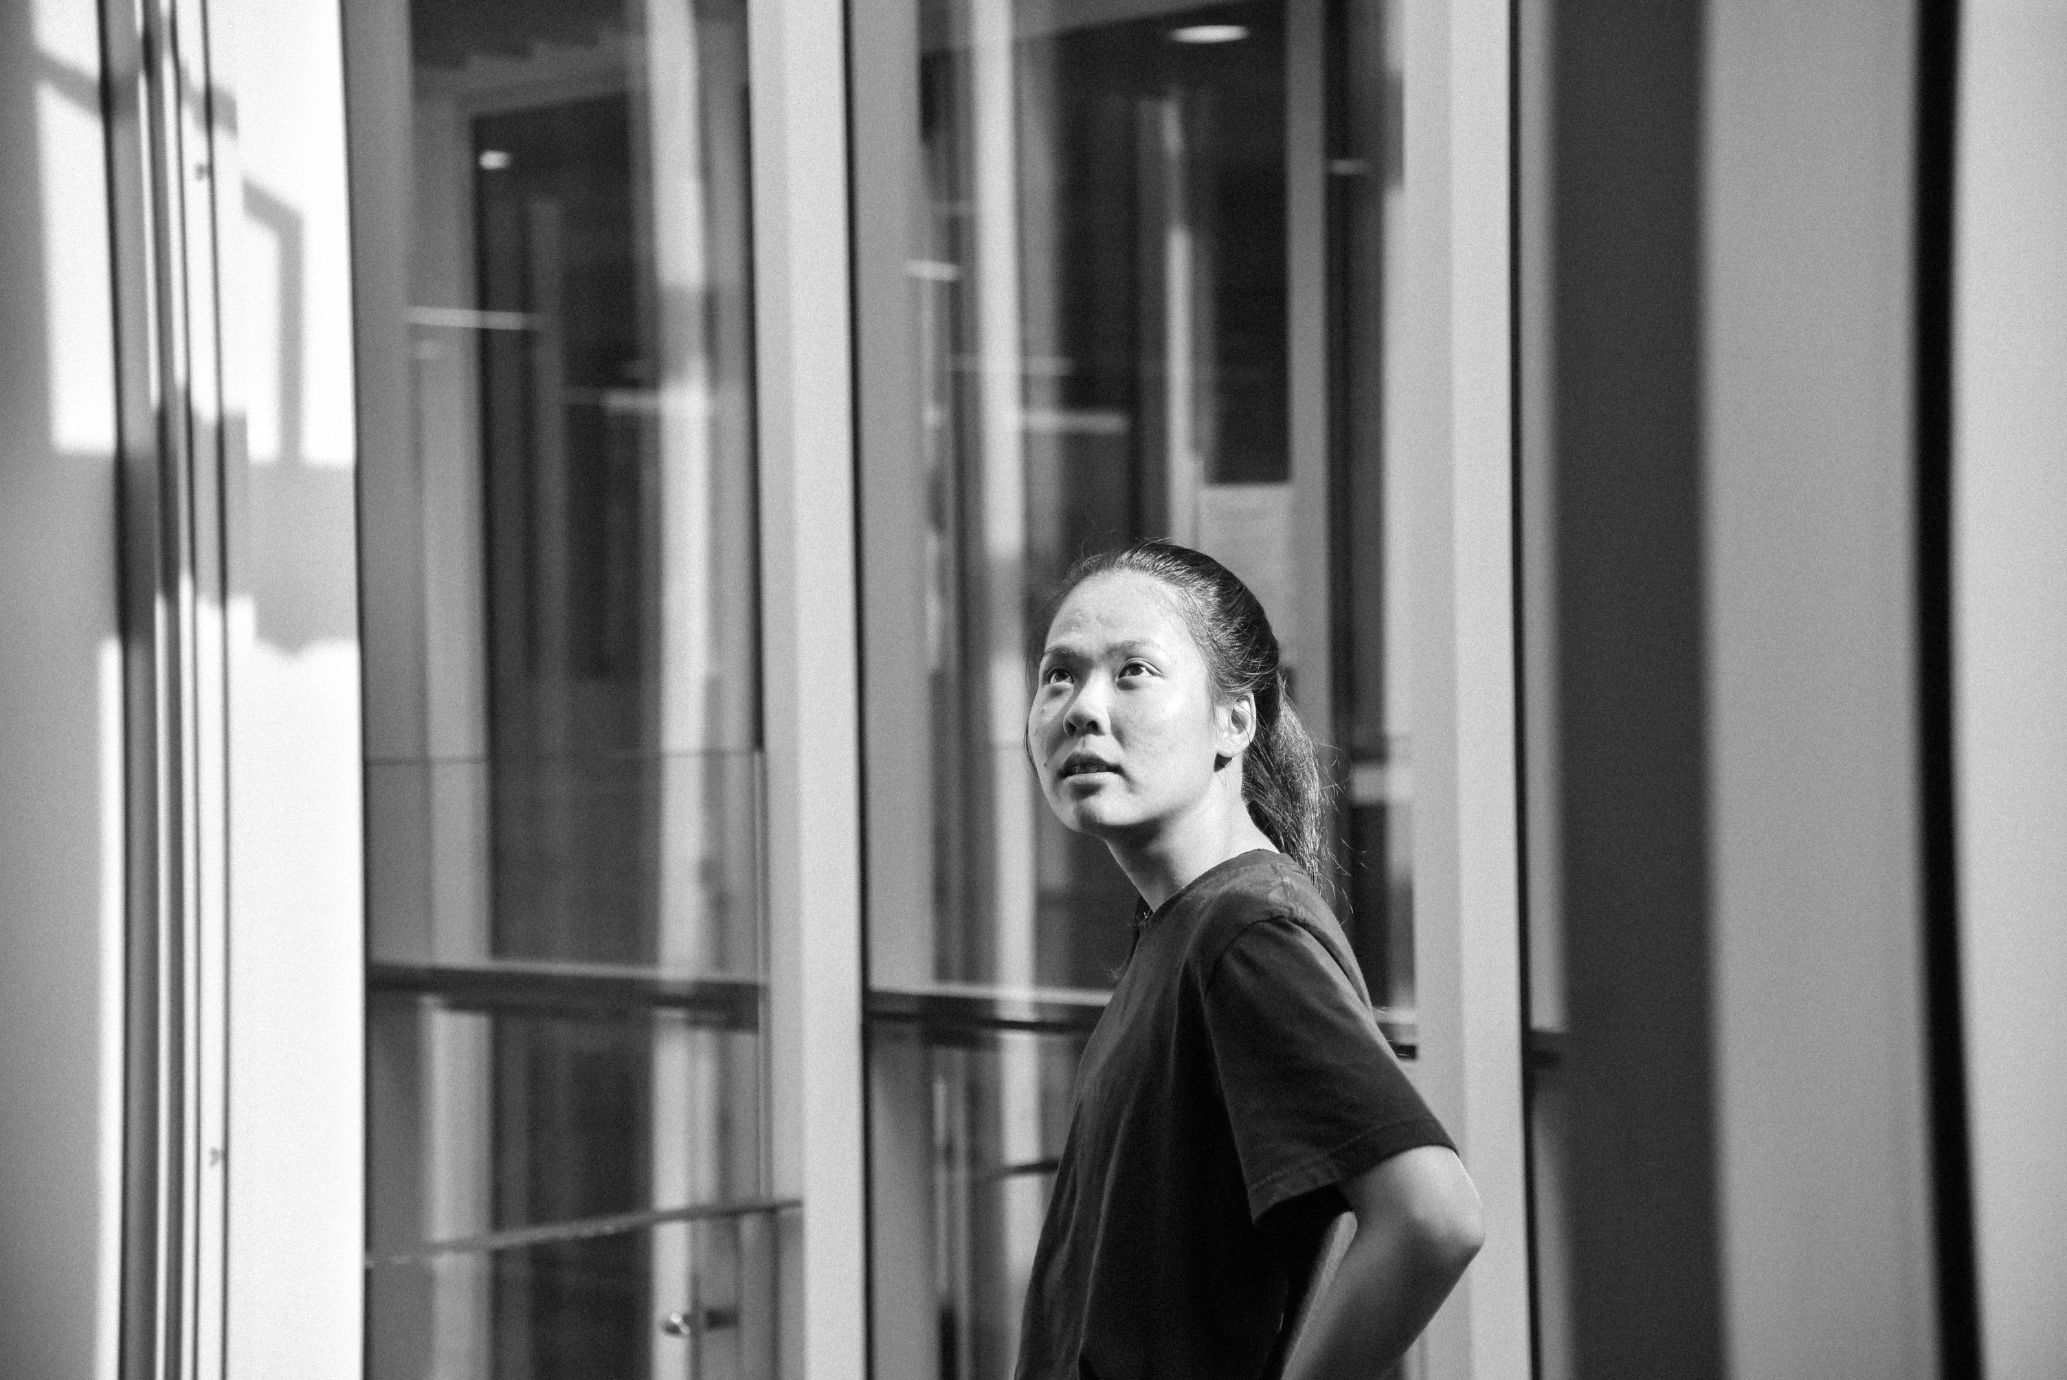 Nguyen Hoang Yen, Bachelor of Design (Multimedia Design) student